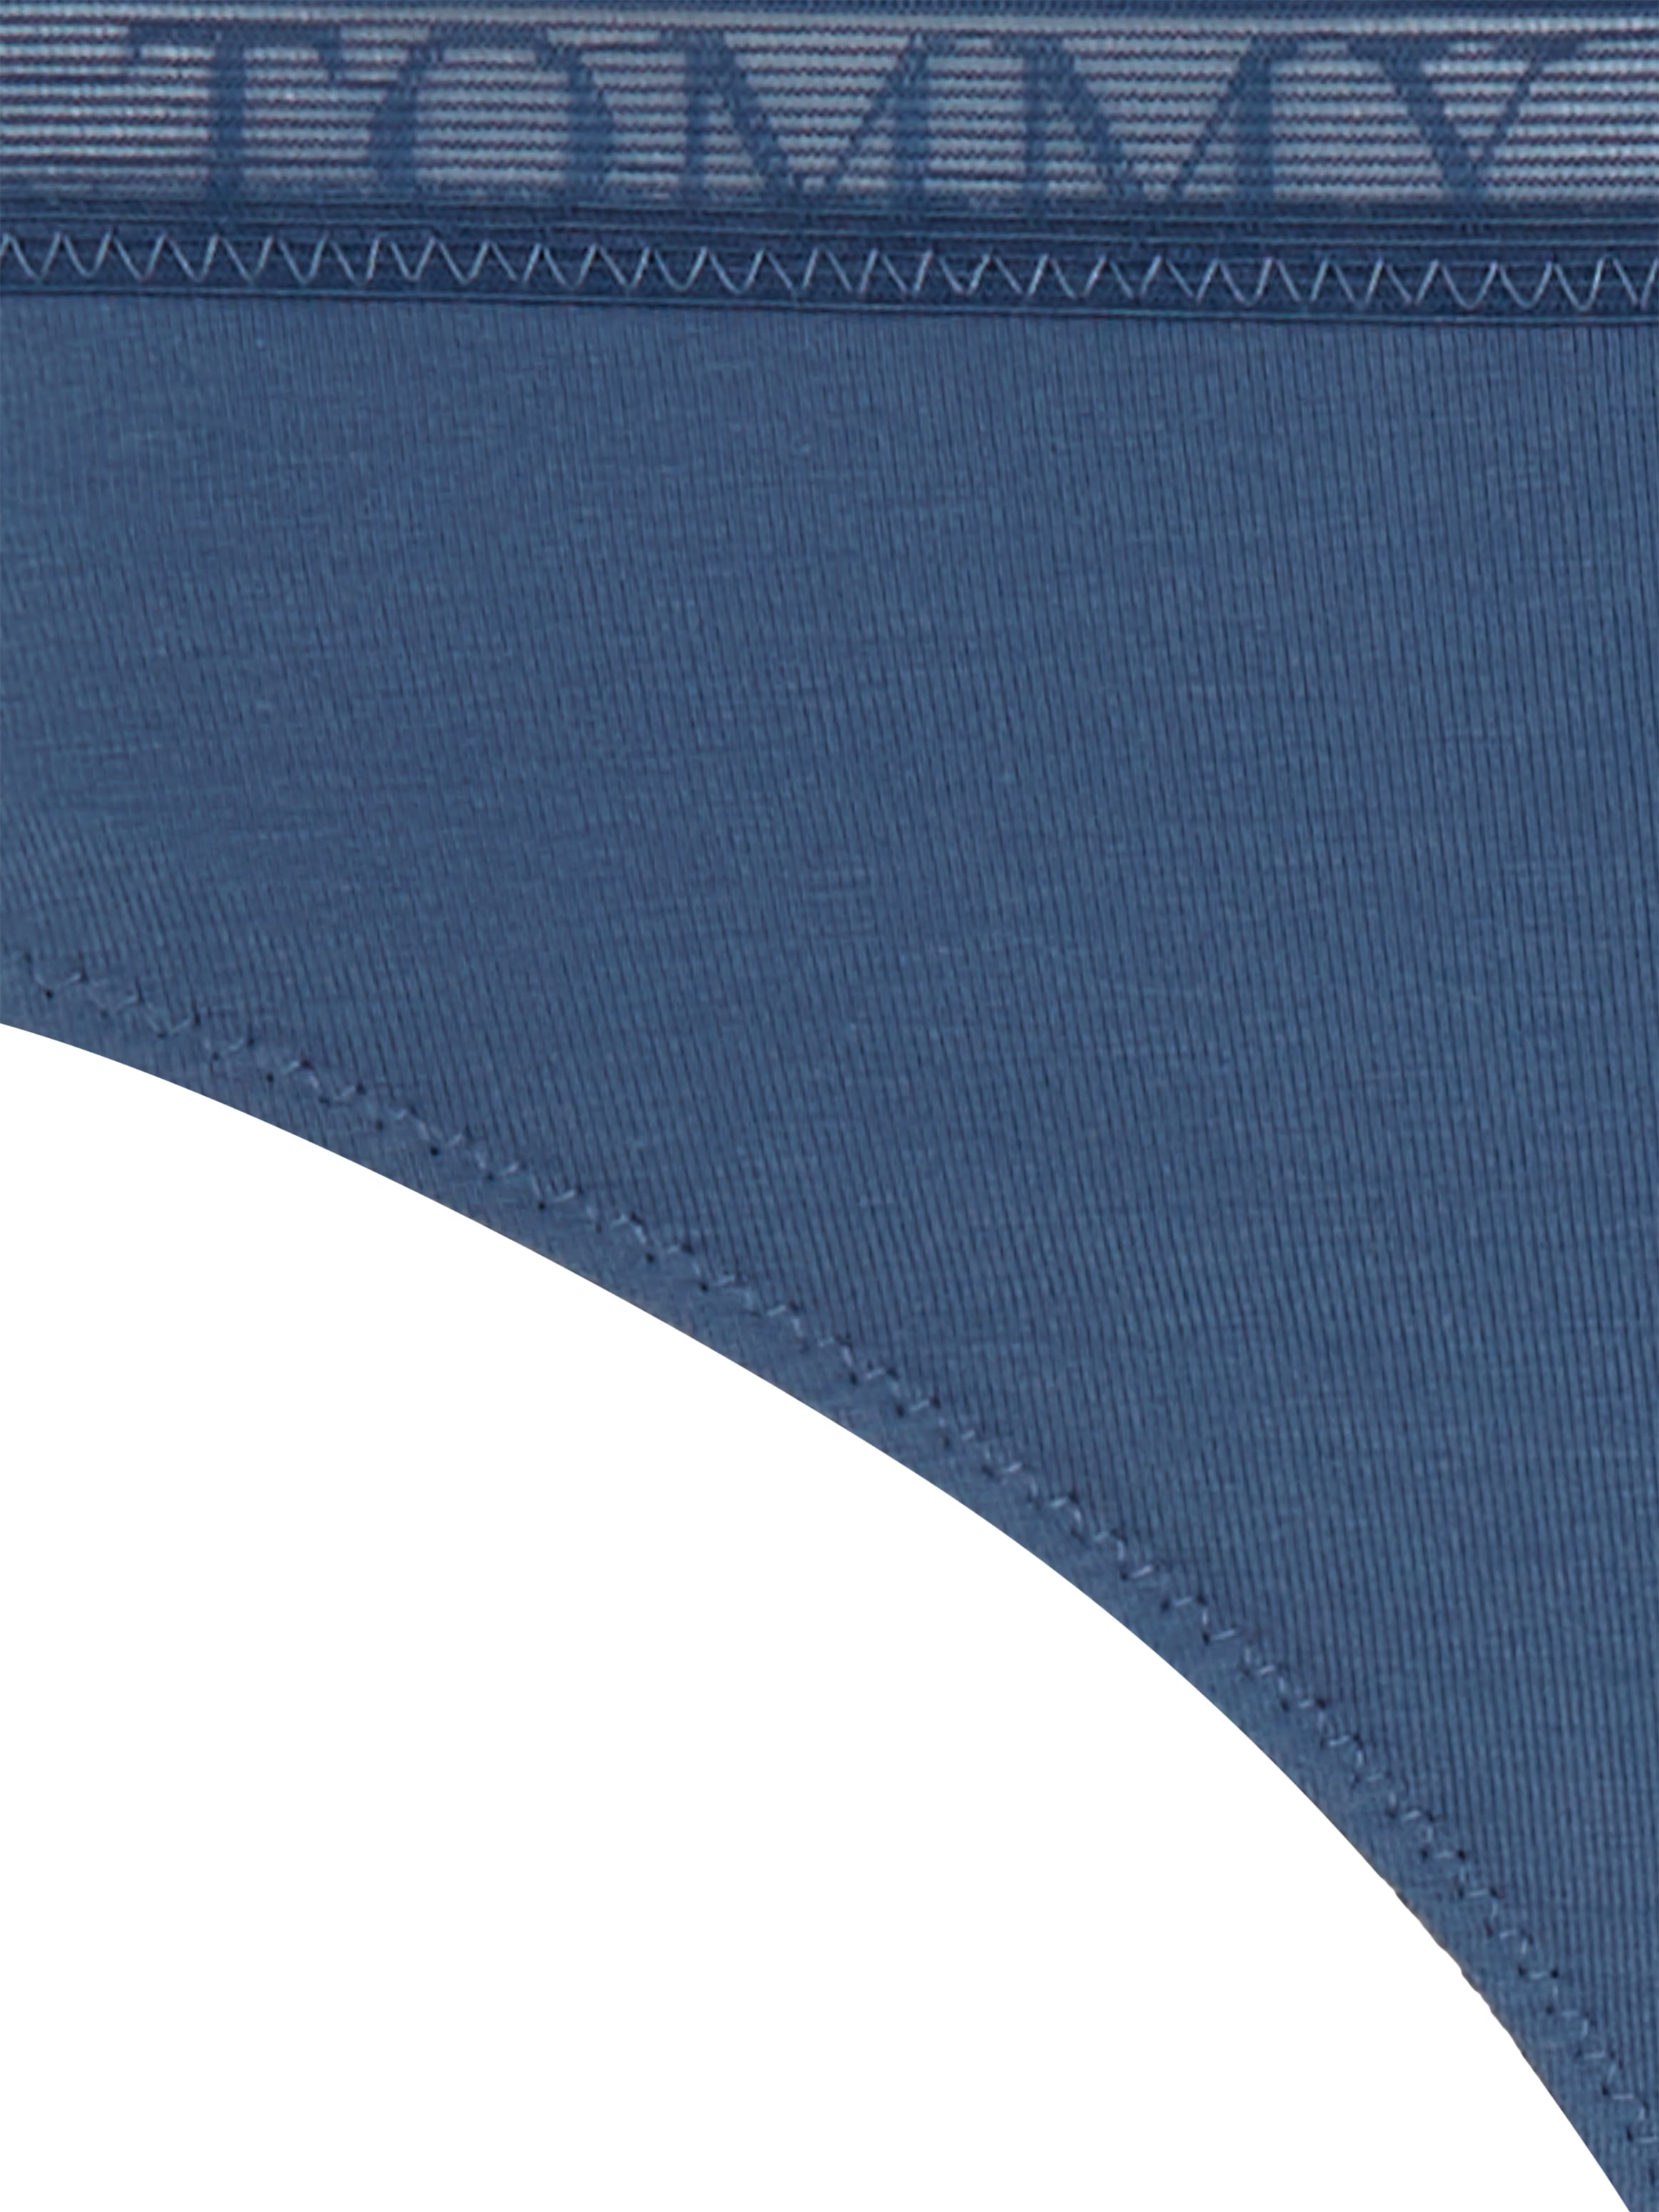 Tommy Hilfiger Underwear T-String »LACE 3P THONG (EXT SIZES)«, (Packung, 3er-Pack), mit Tommy Hilfiger Logobund